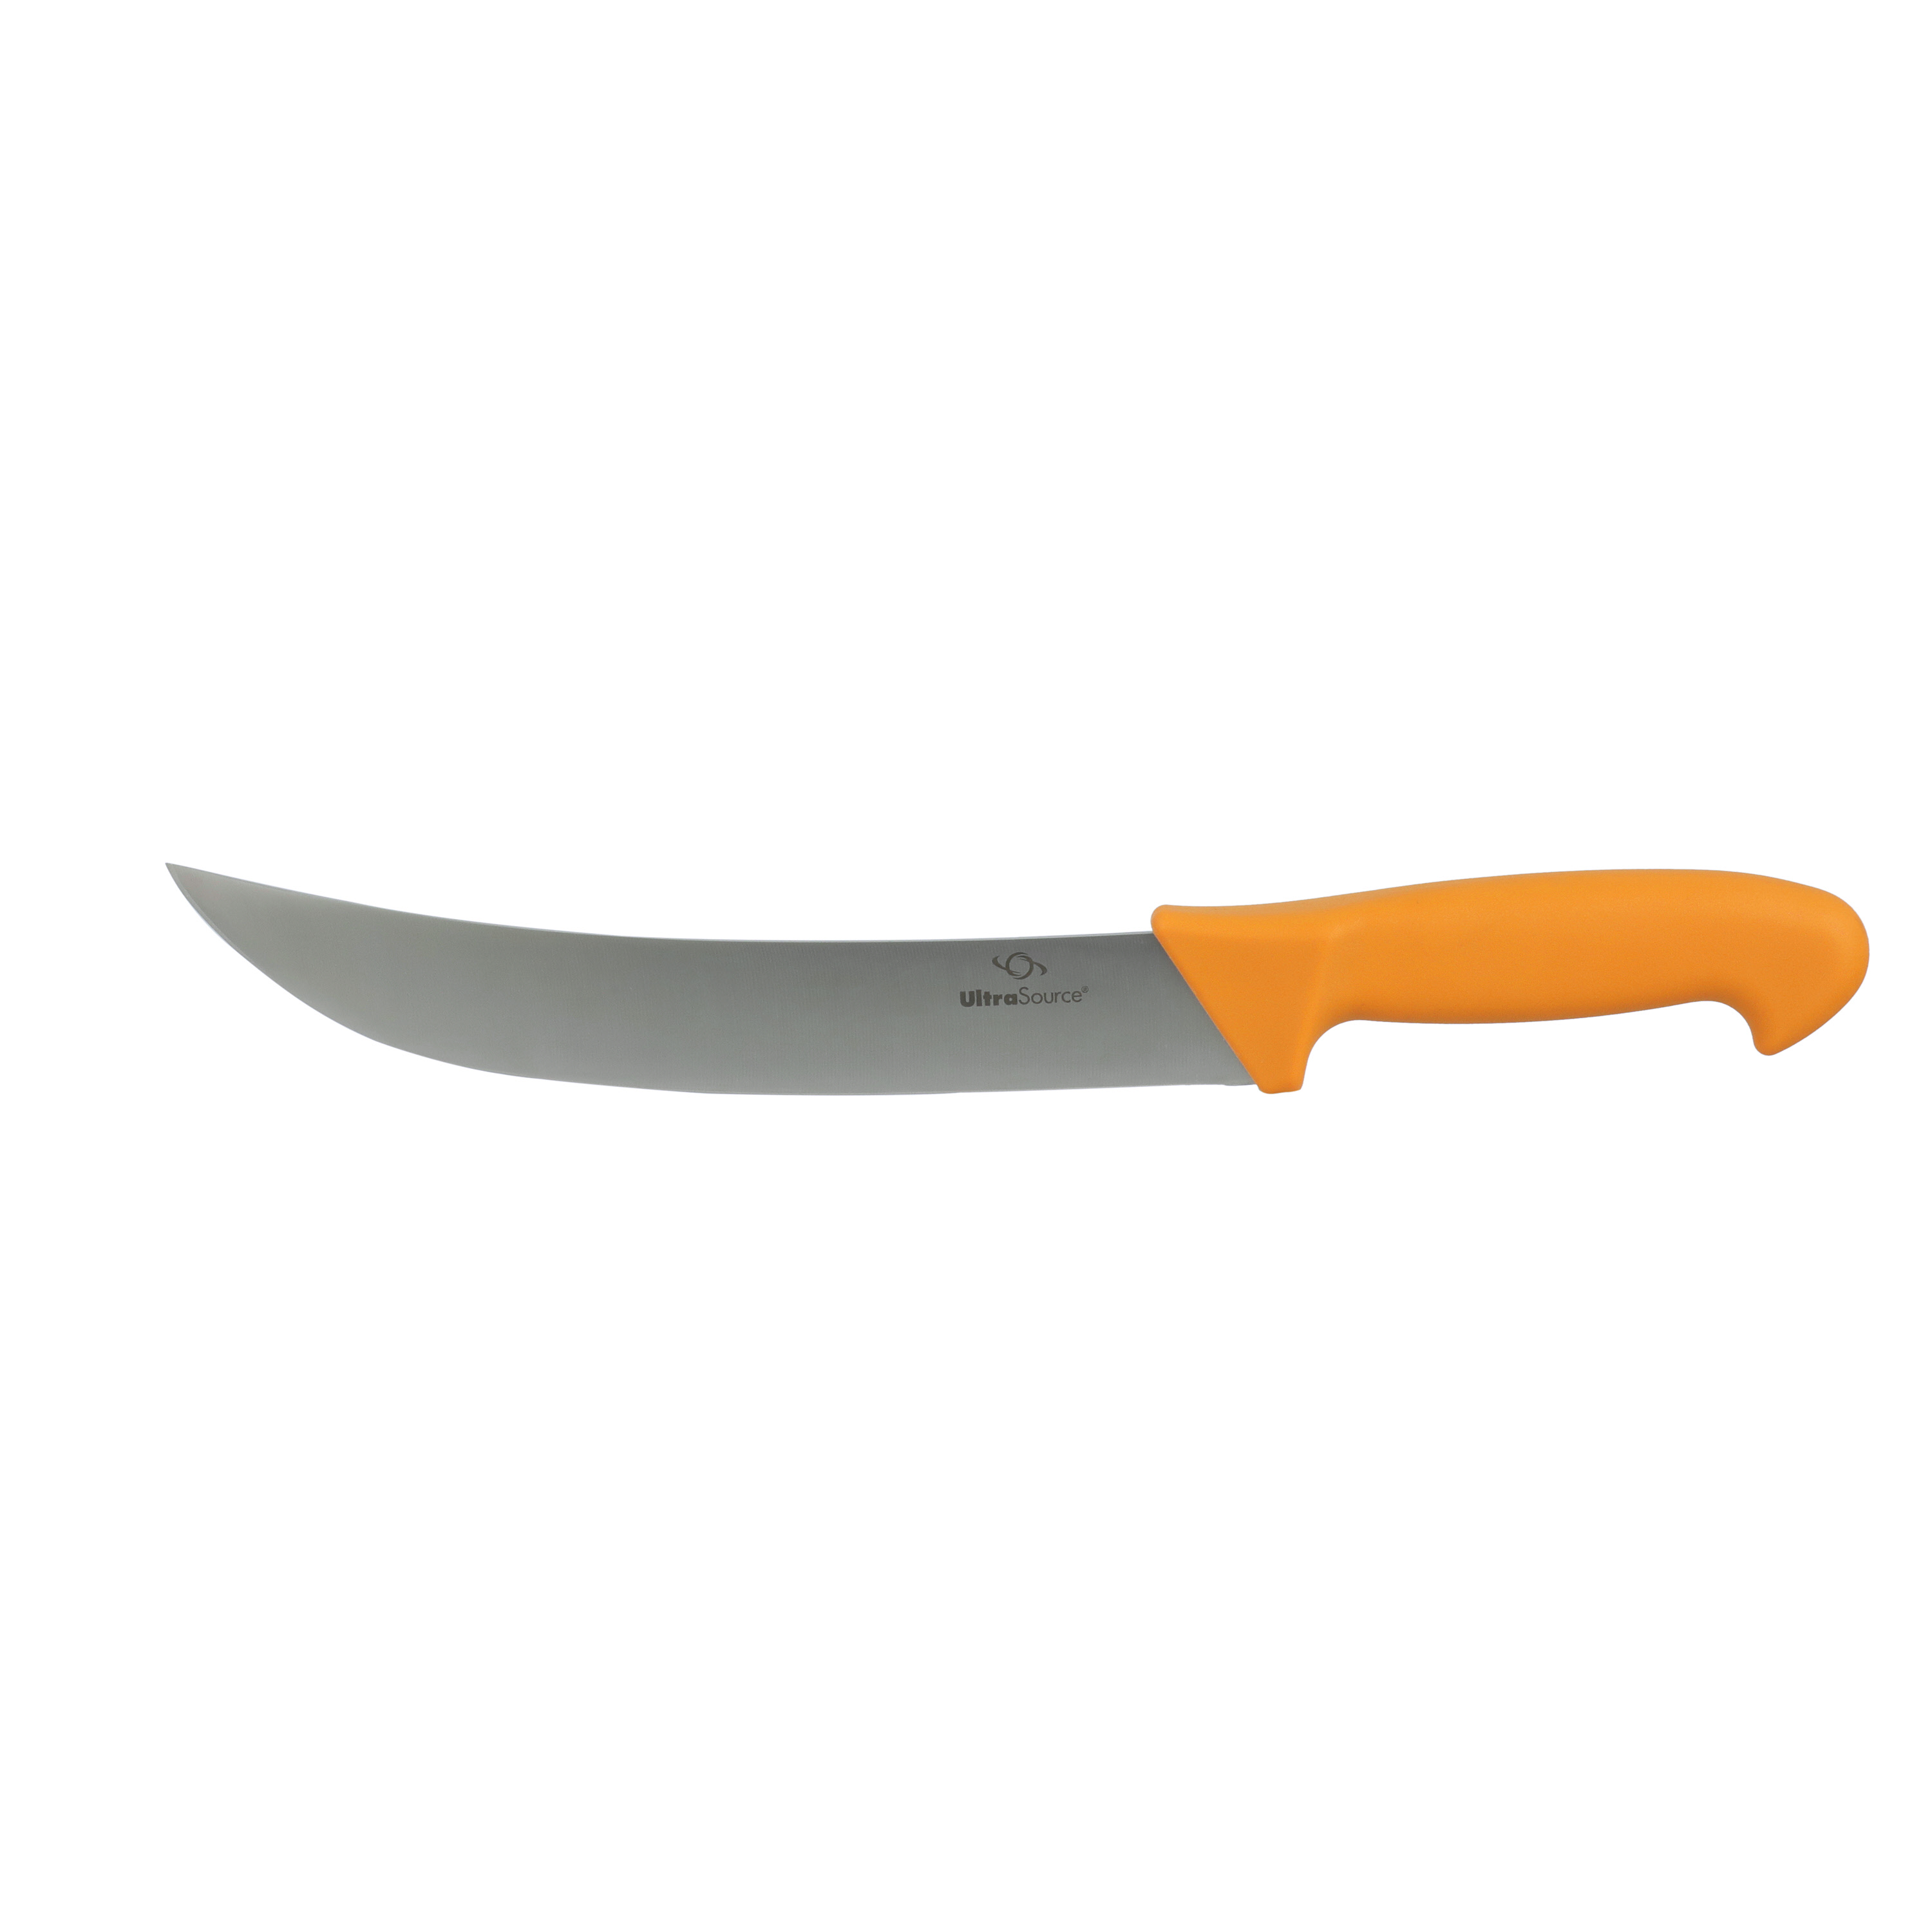 Butcher Supplies, PDF, Knife